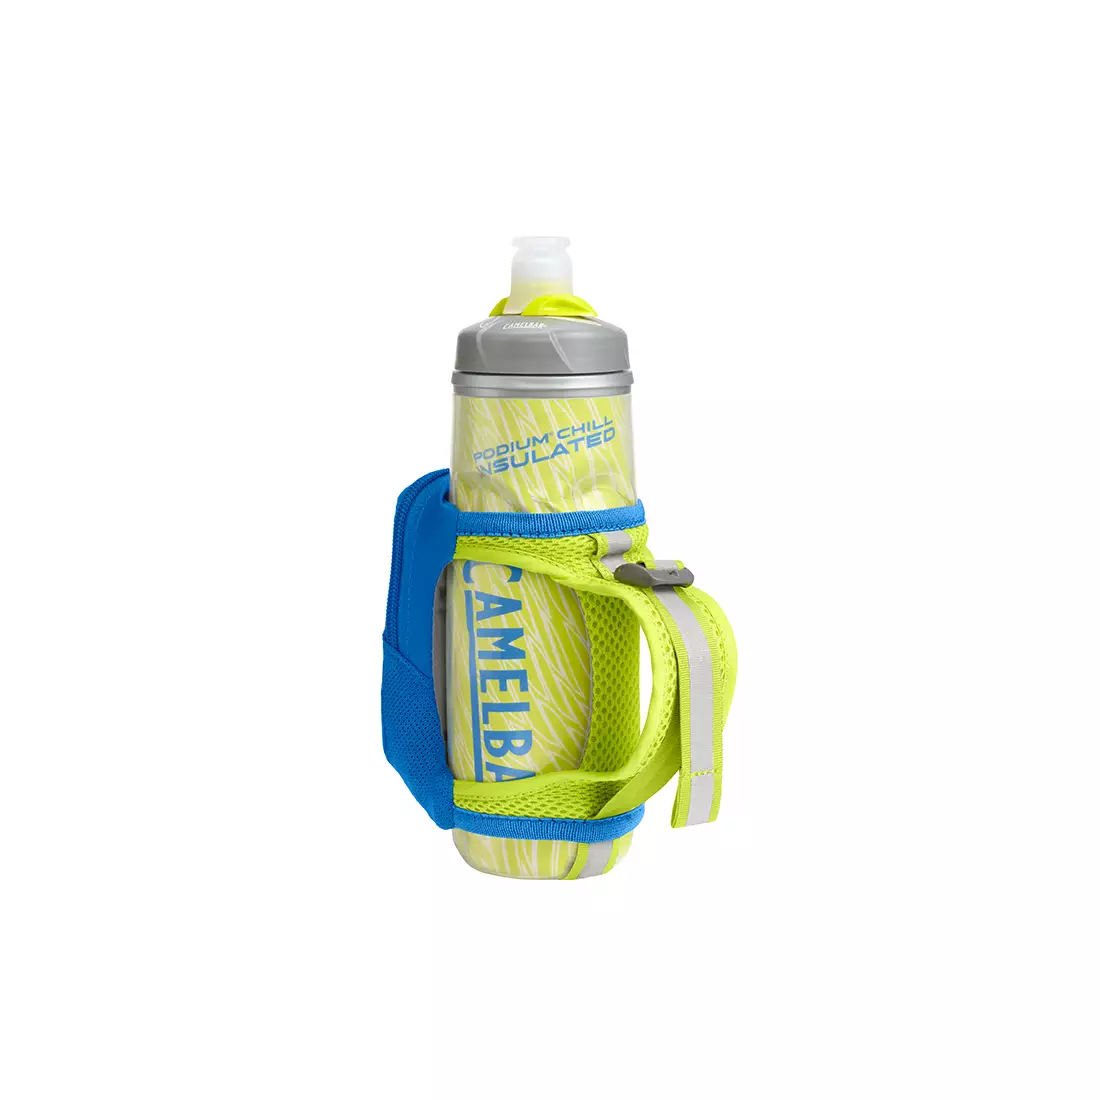 CAMELBAK Quick Grip Chill Thermal Bottle 21oz/621 ml elektromos kék INTL 62432-IN SS16